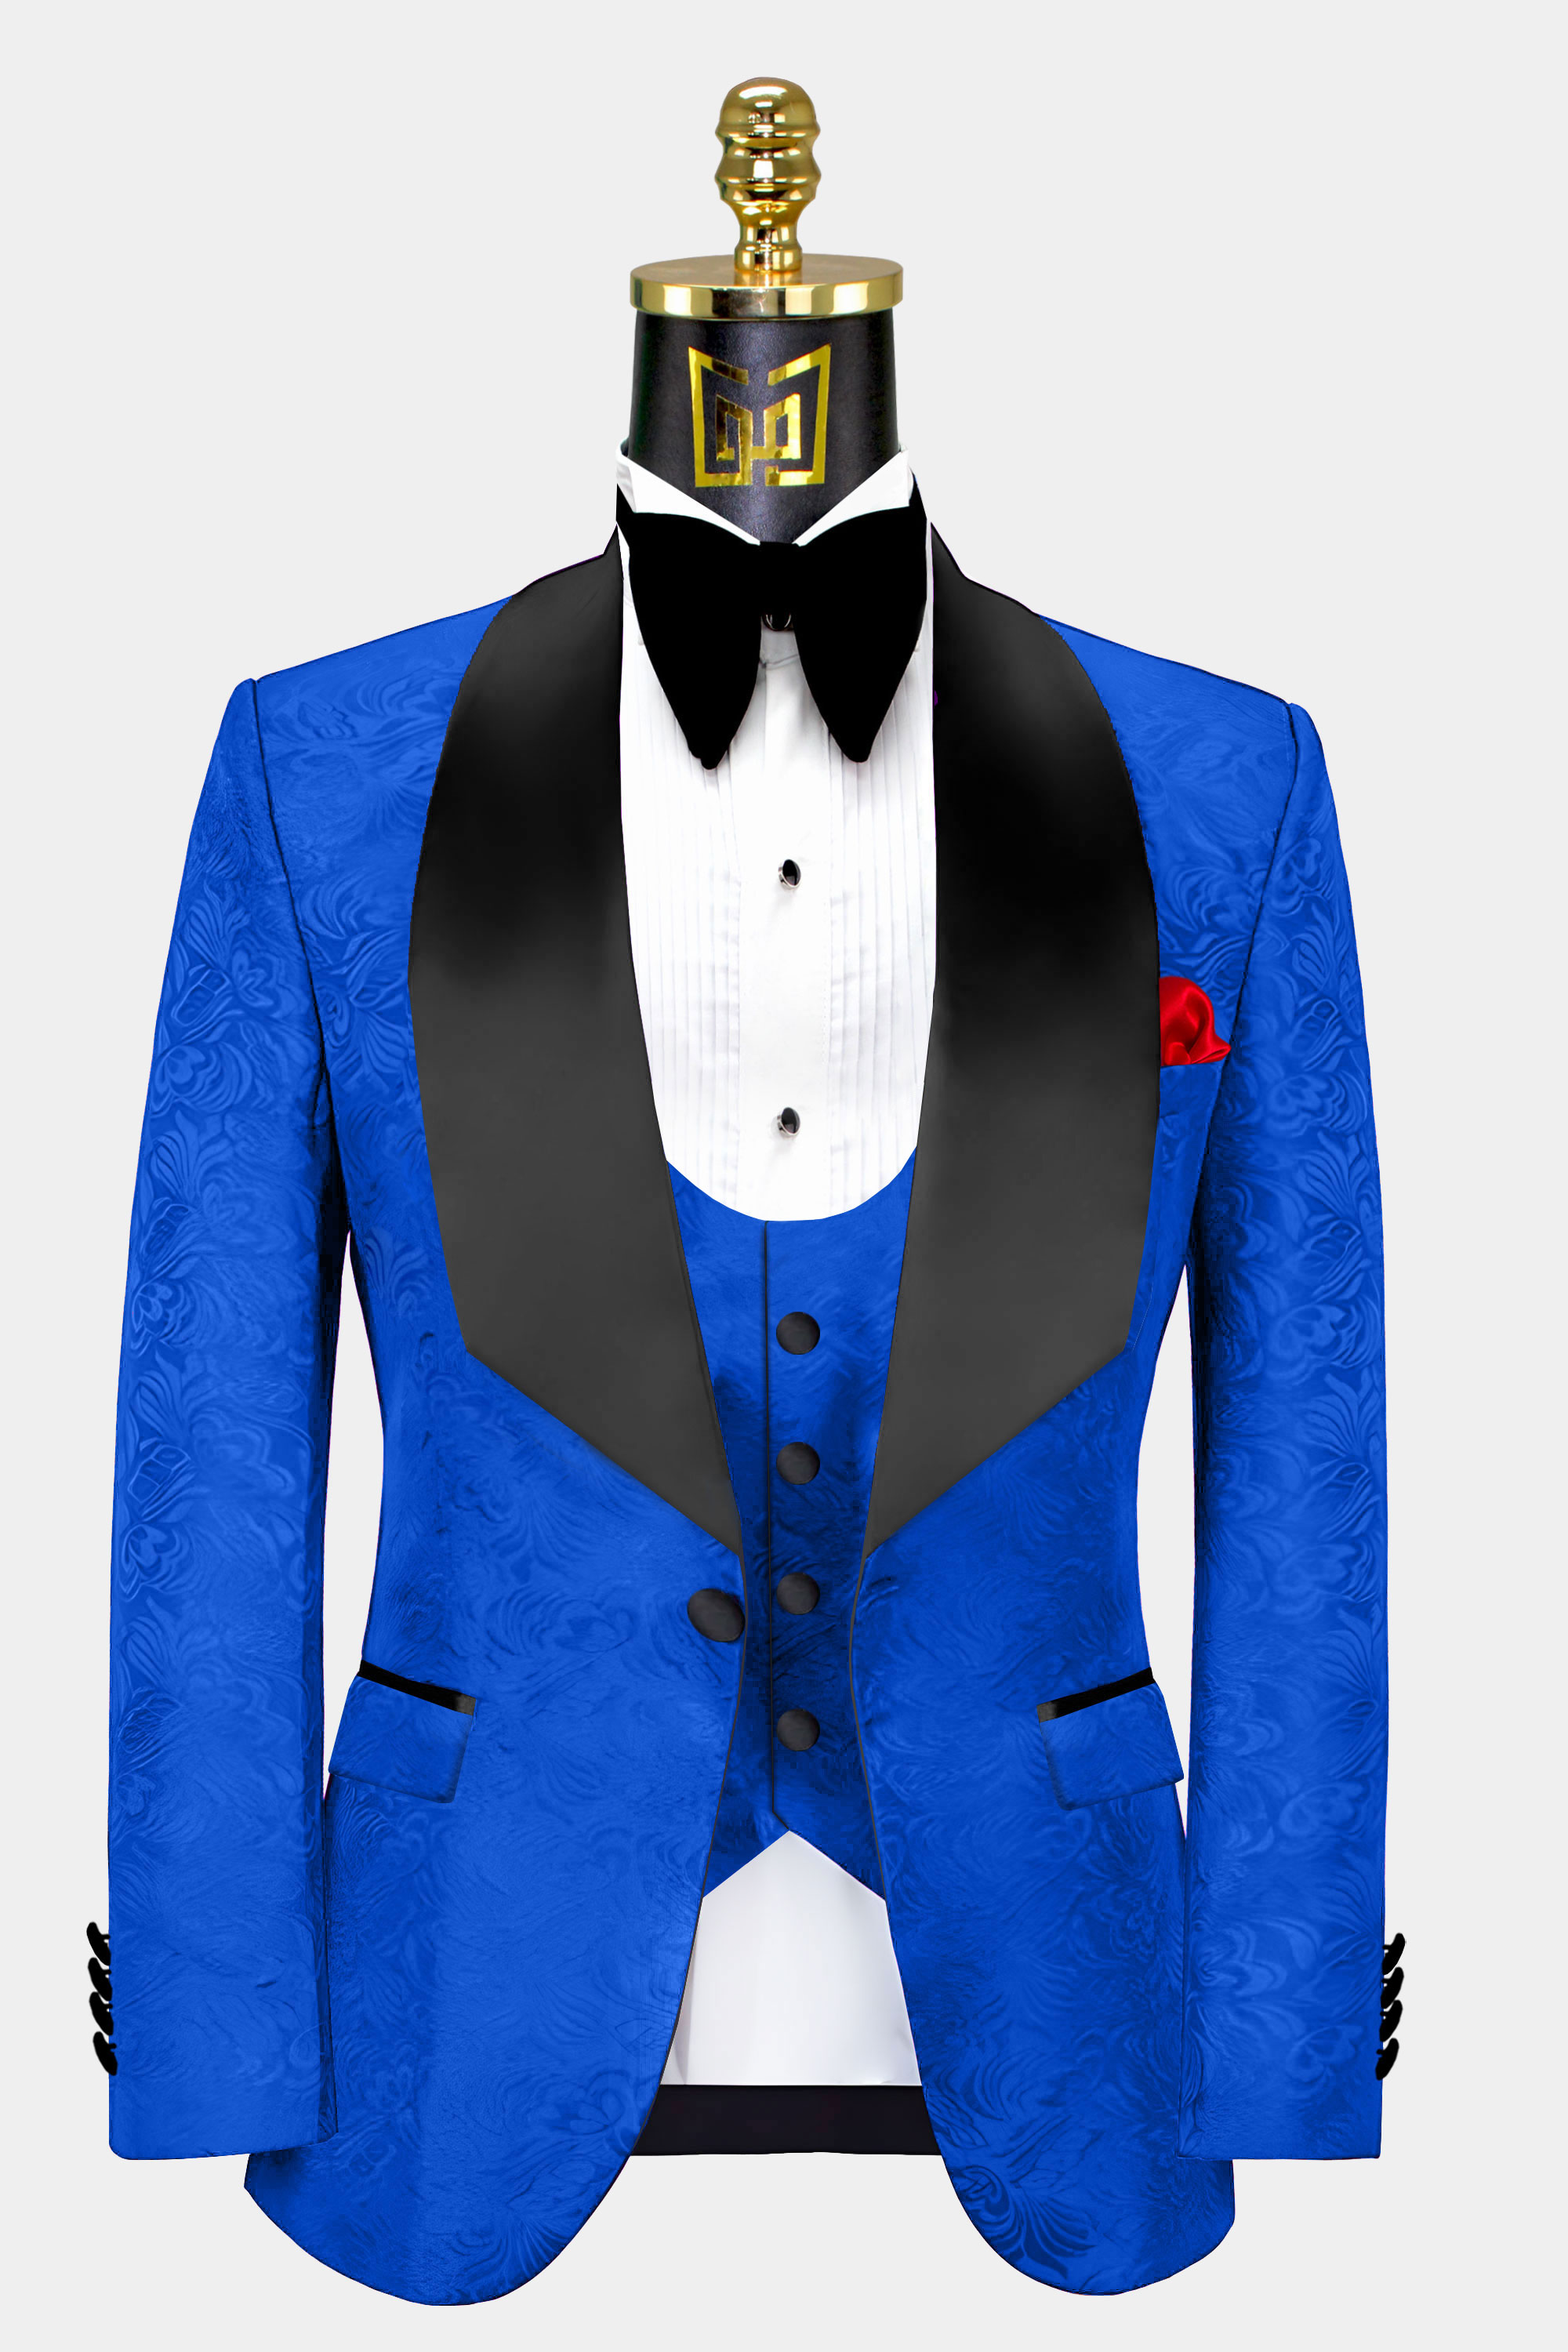 Royal Blue and Black Tuxedo Suit | Gentleman's Guru